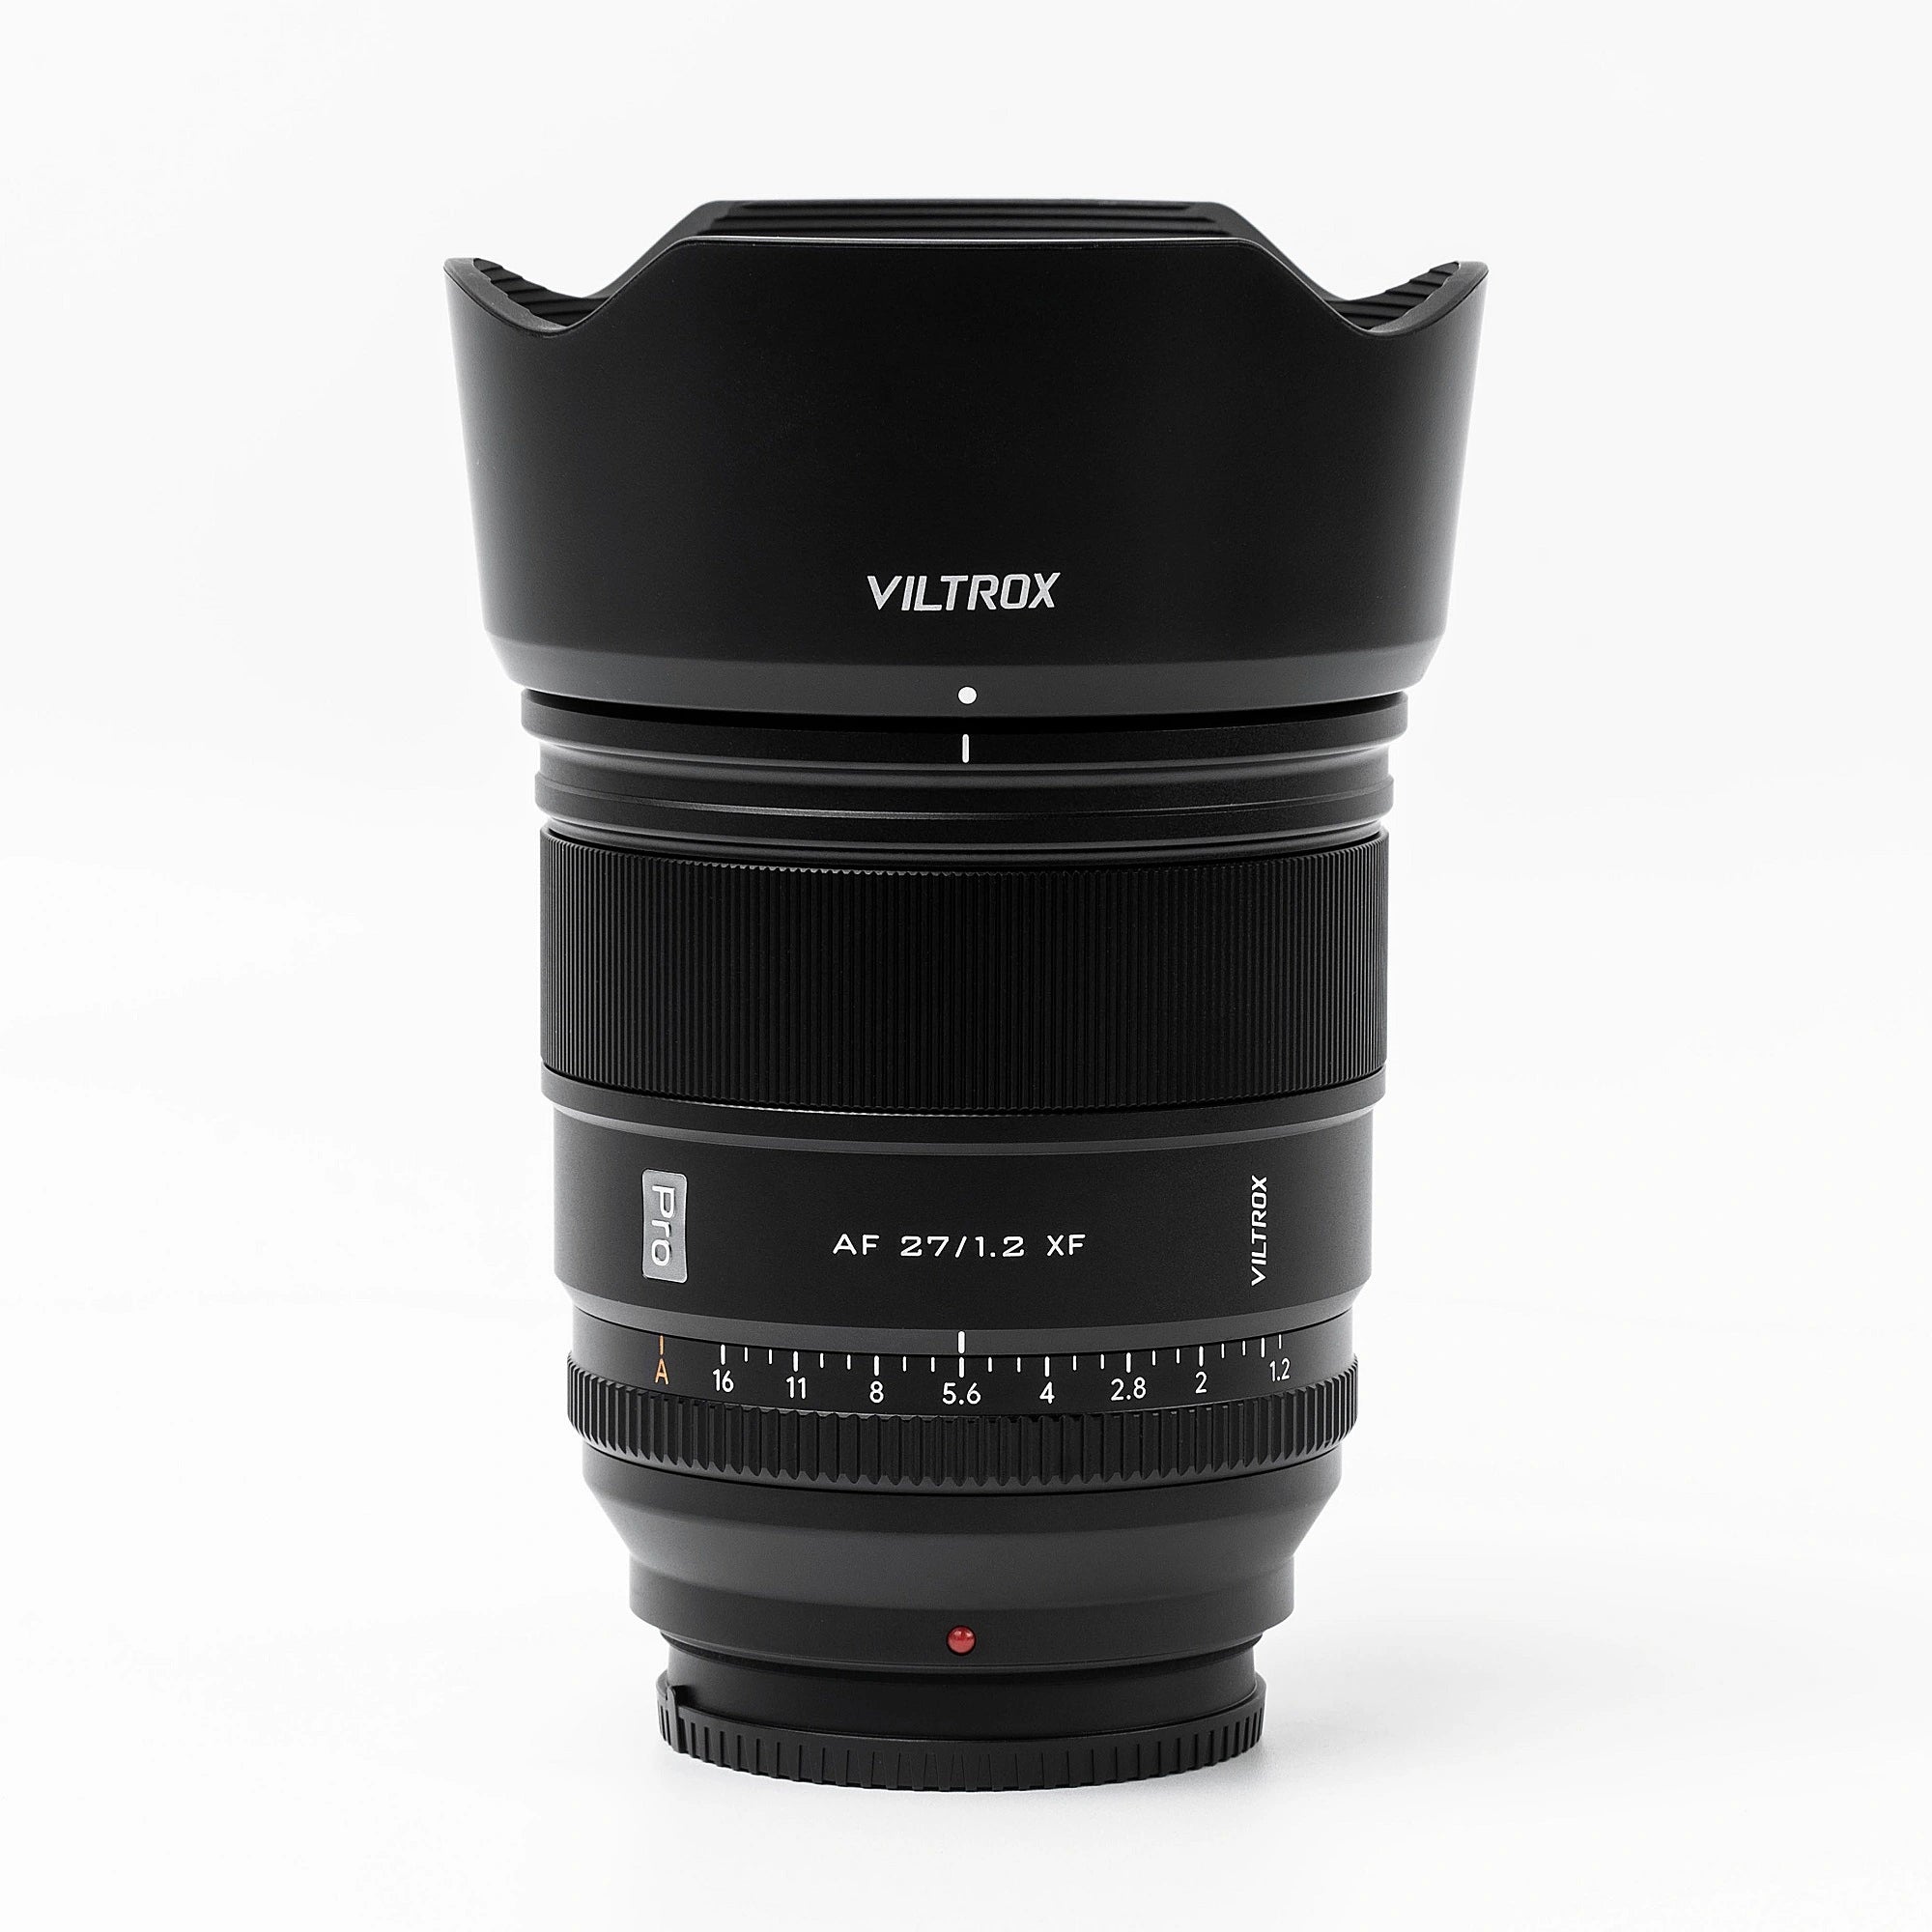 Viltrox 27mm F1.2 Pro Large Aperture Autofocus Lens for Fuji X-Mount Mirrorless Cameras